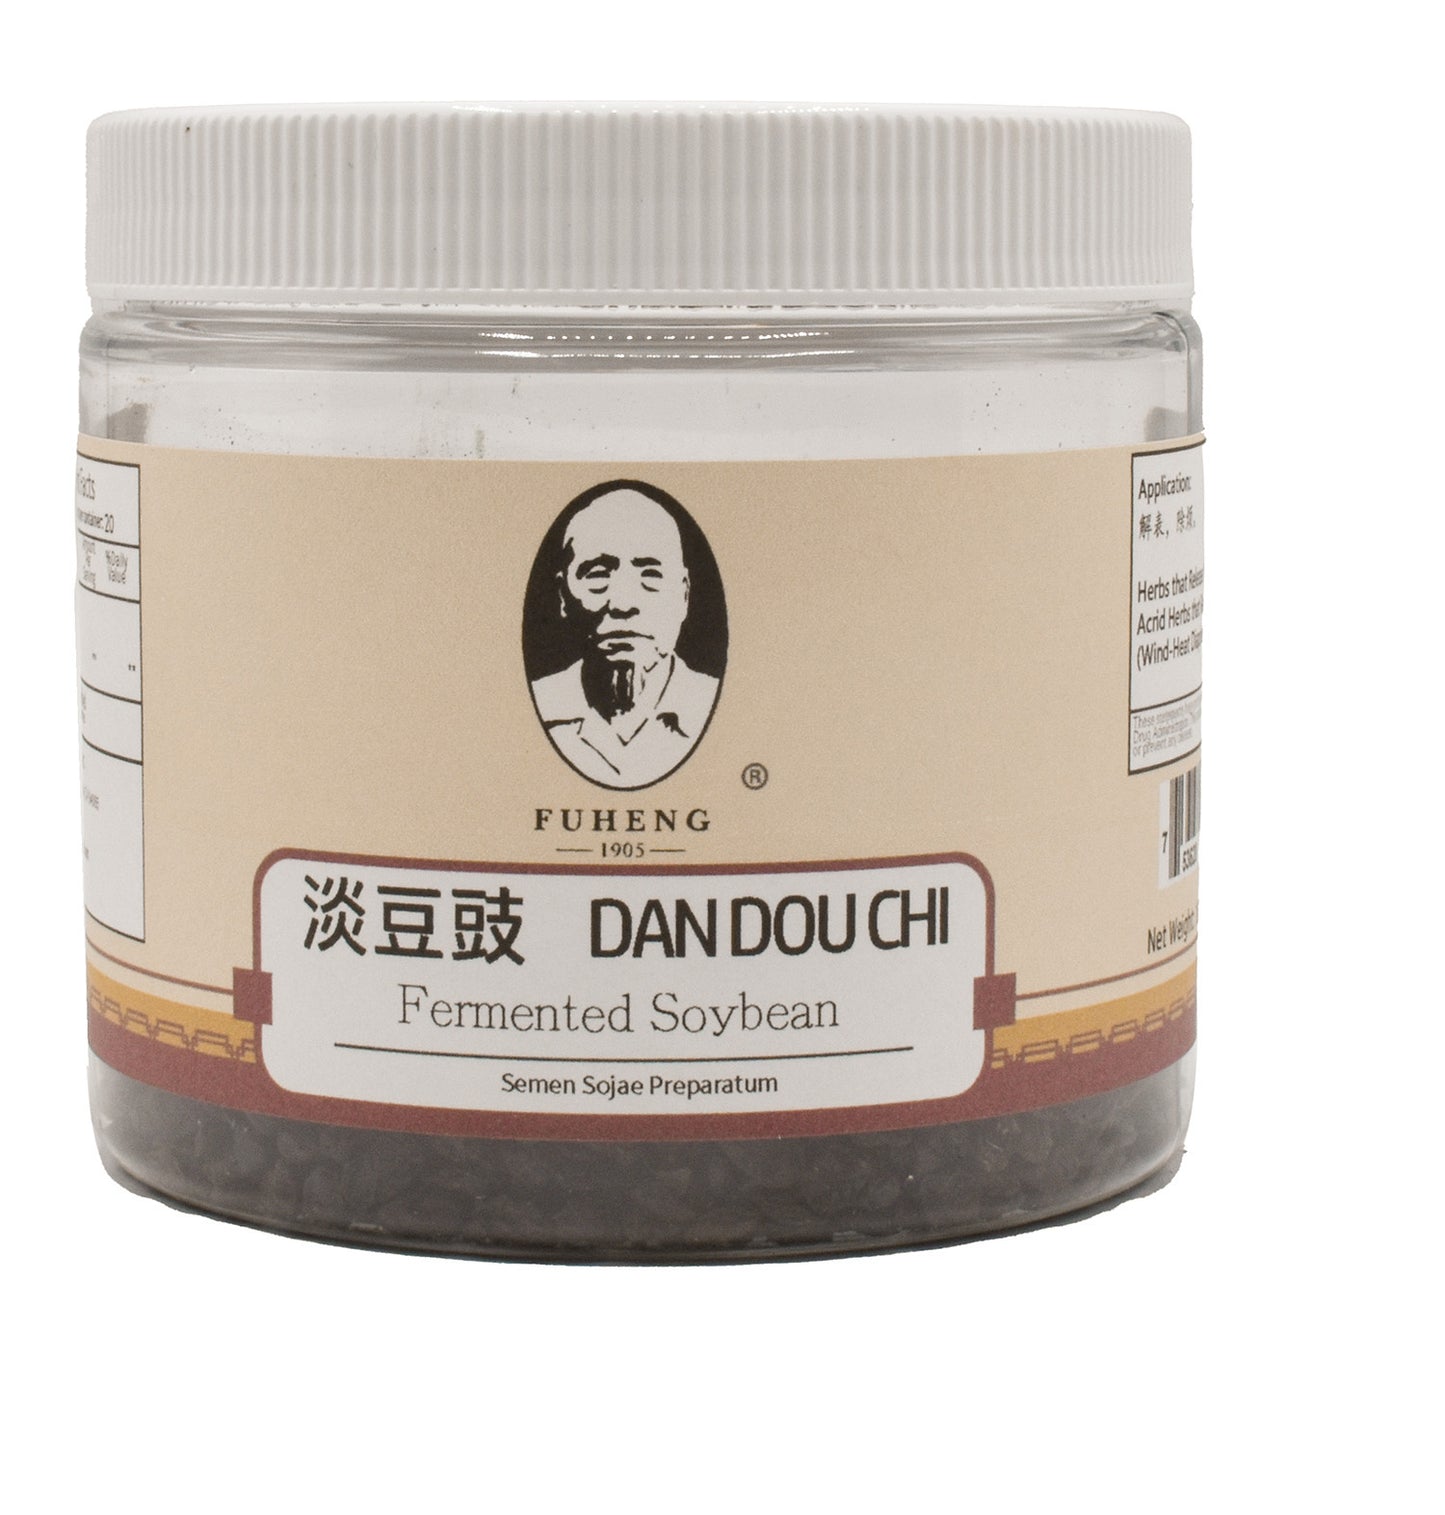 DAN DOU CHI - 淡豆豉 - Fermented Soybean - 100g